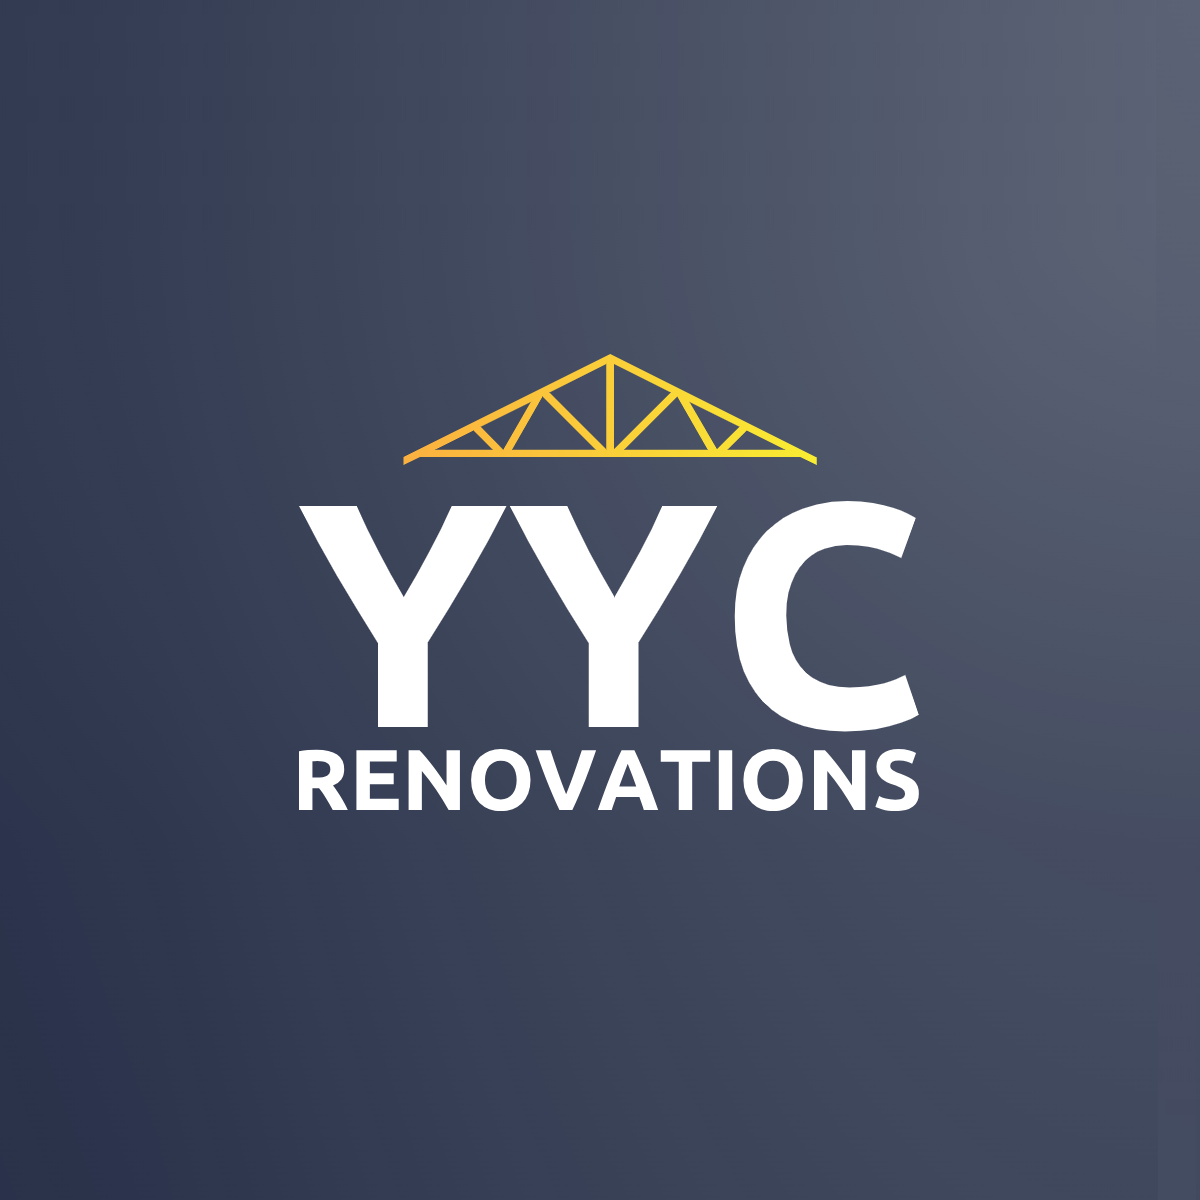 YYC Renovations's logo